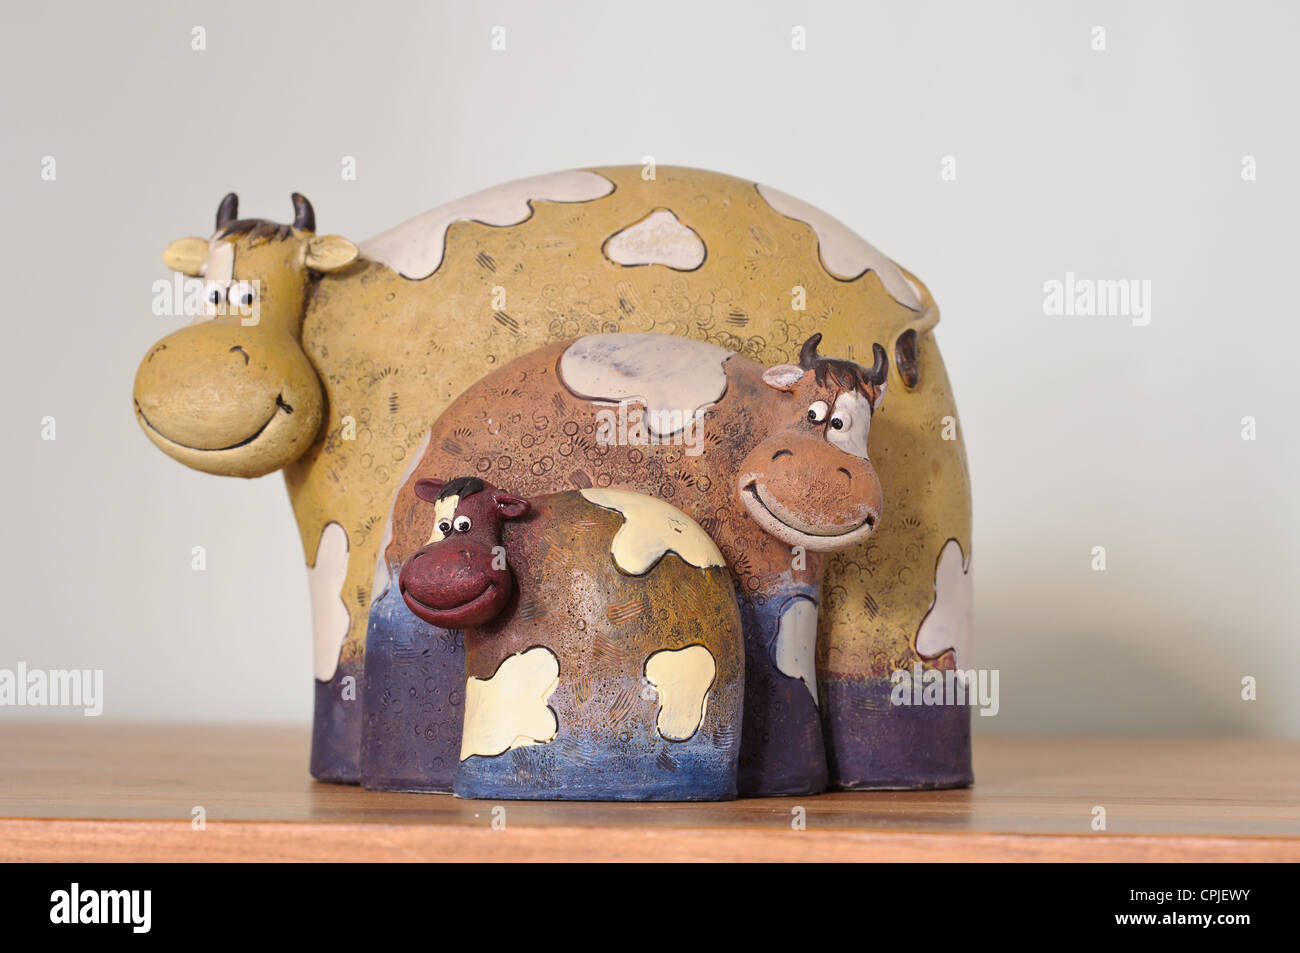 Three cows sculpture ornament Stock Photo